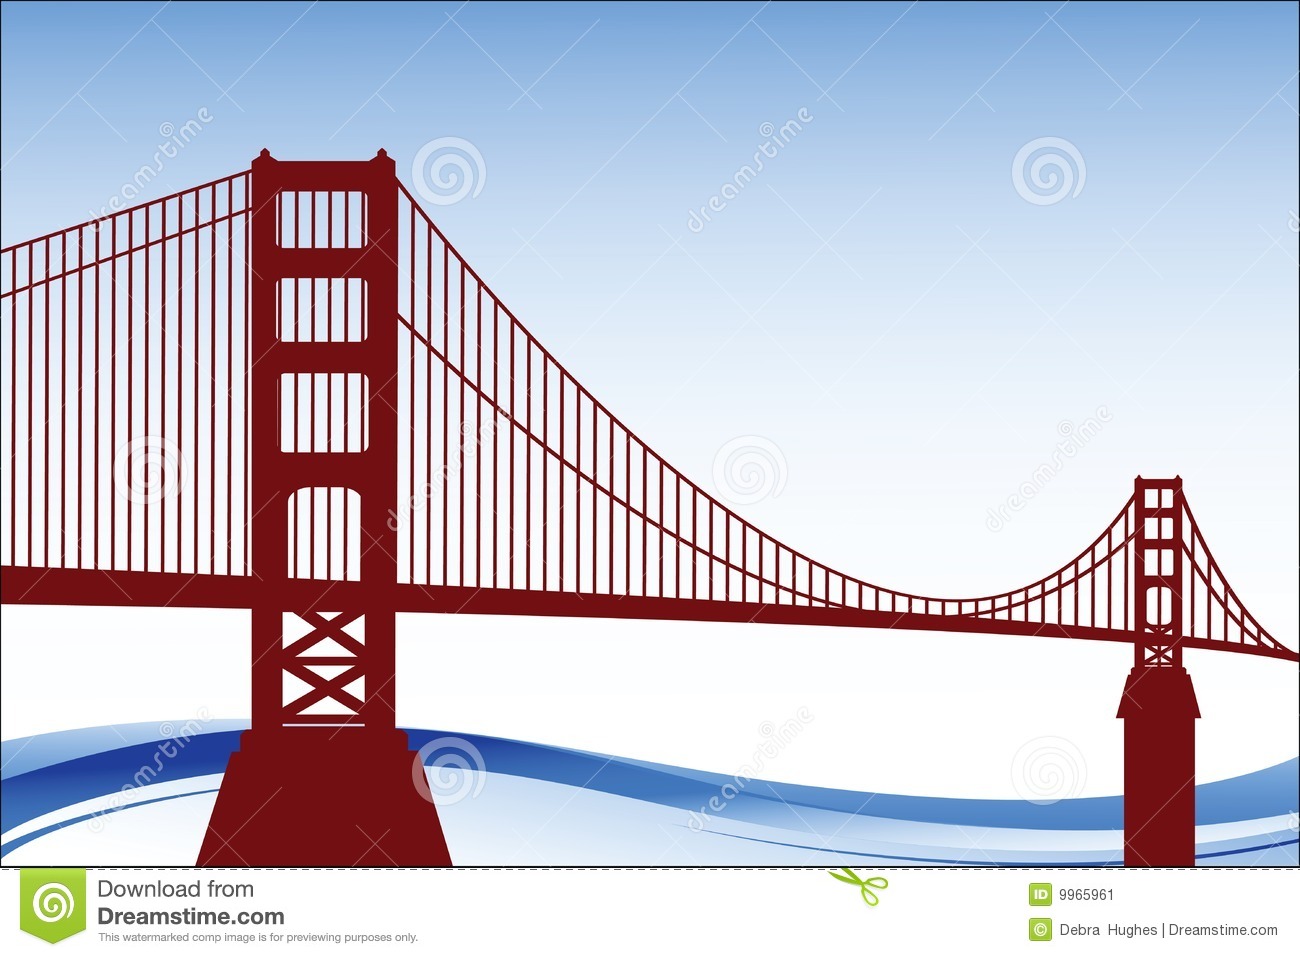 Golden Gate Bridge Landscape Perspective Stock Image   Image  9965961